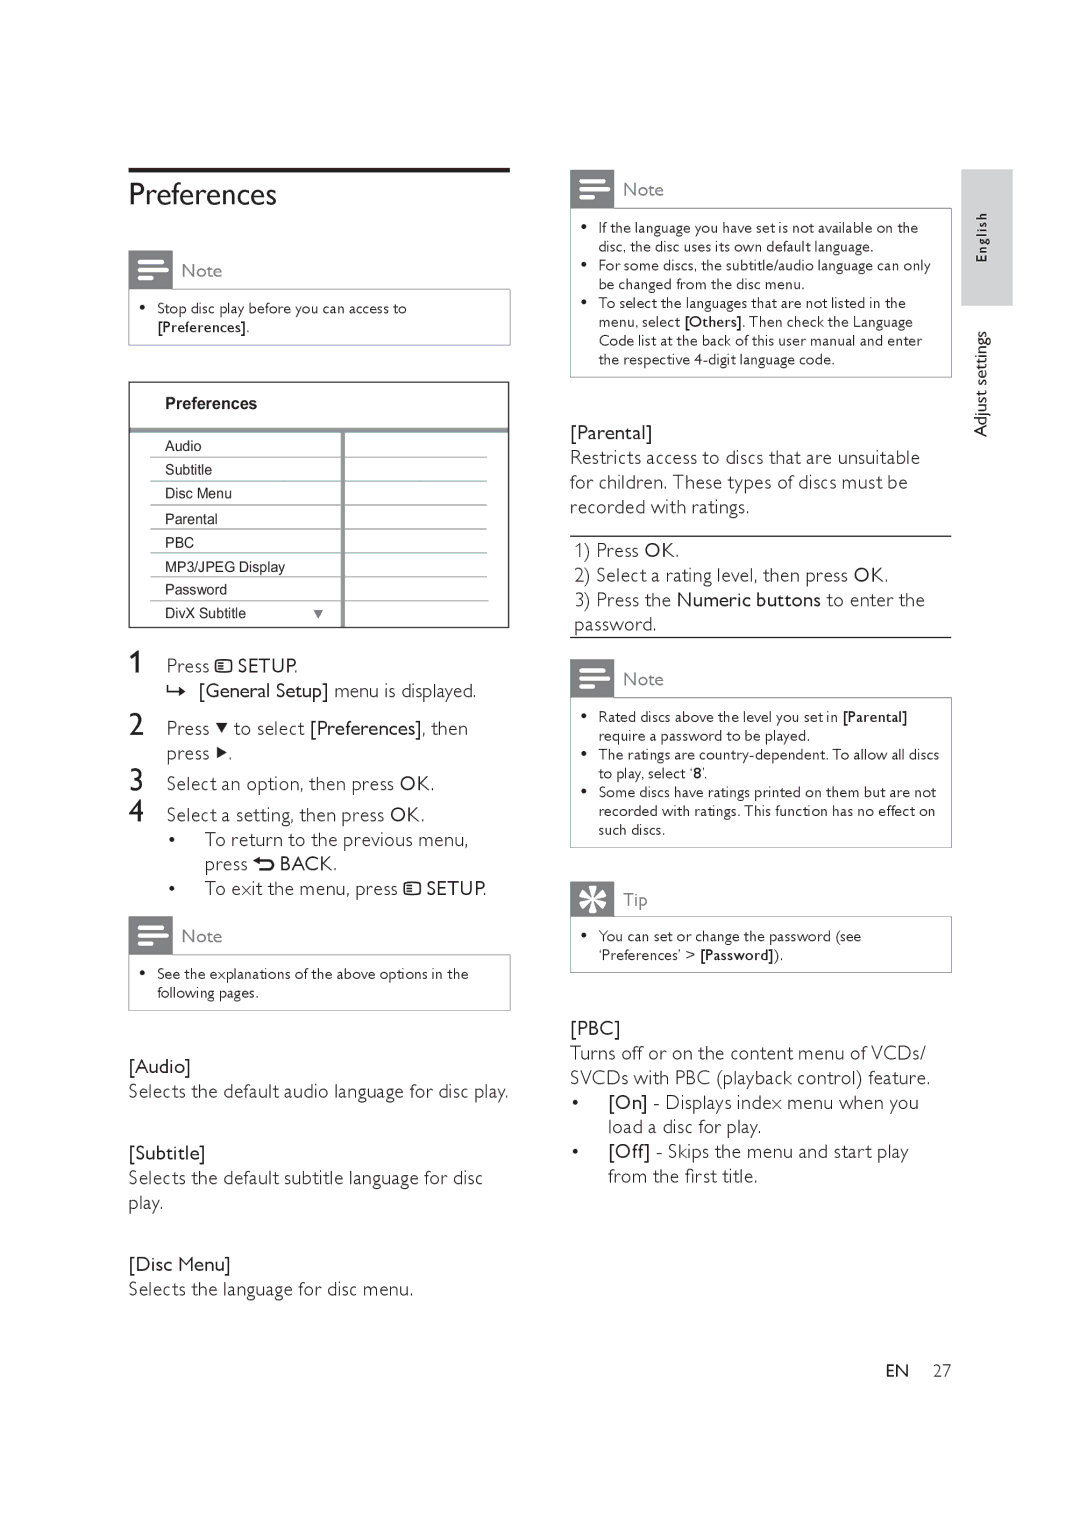 Philips HTS3019/12 user manual Preferences, Pbc 